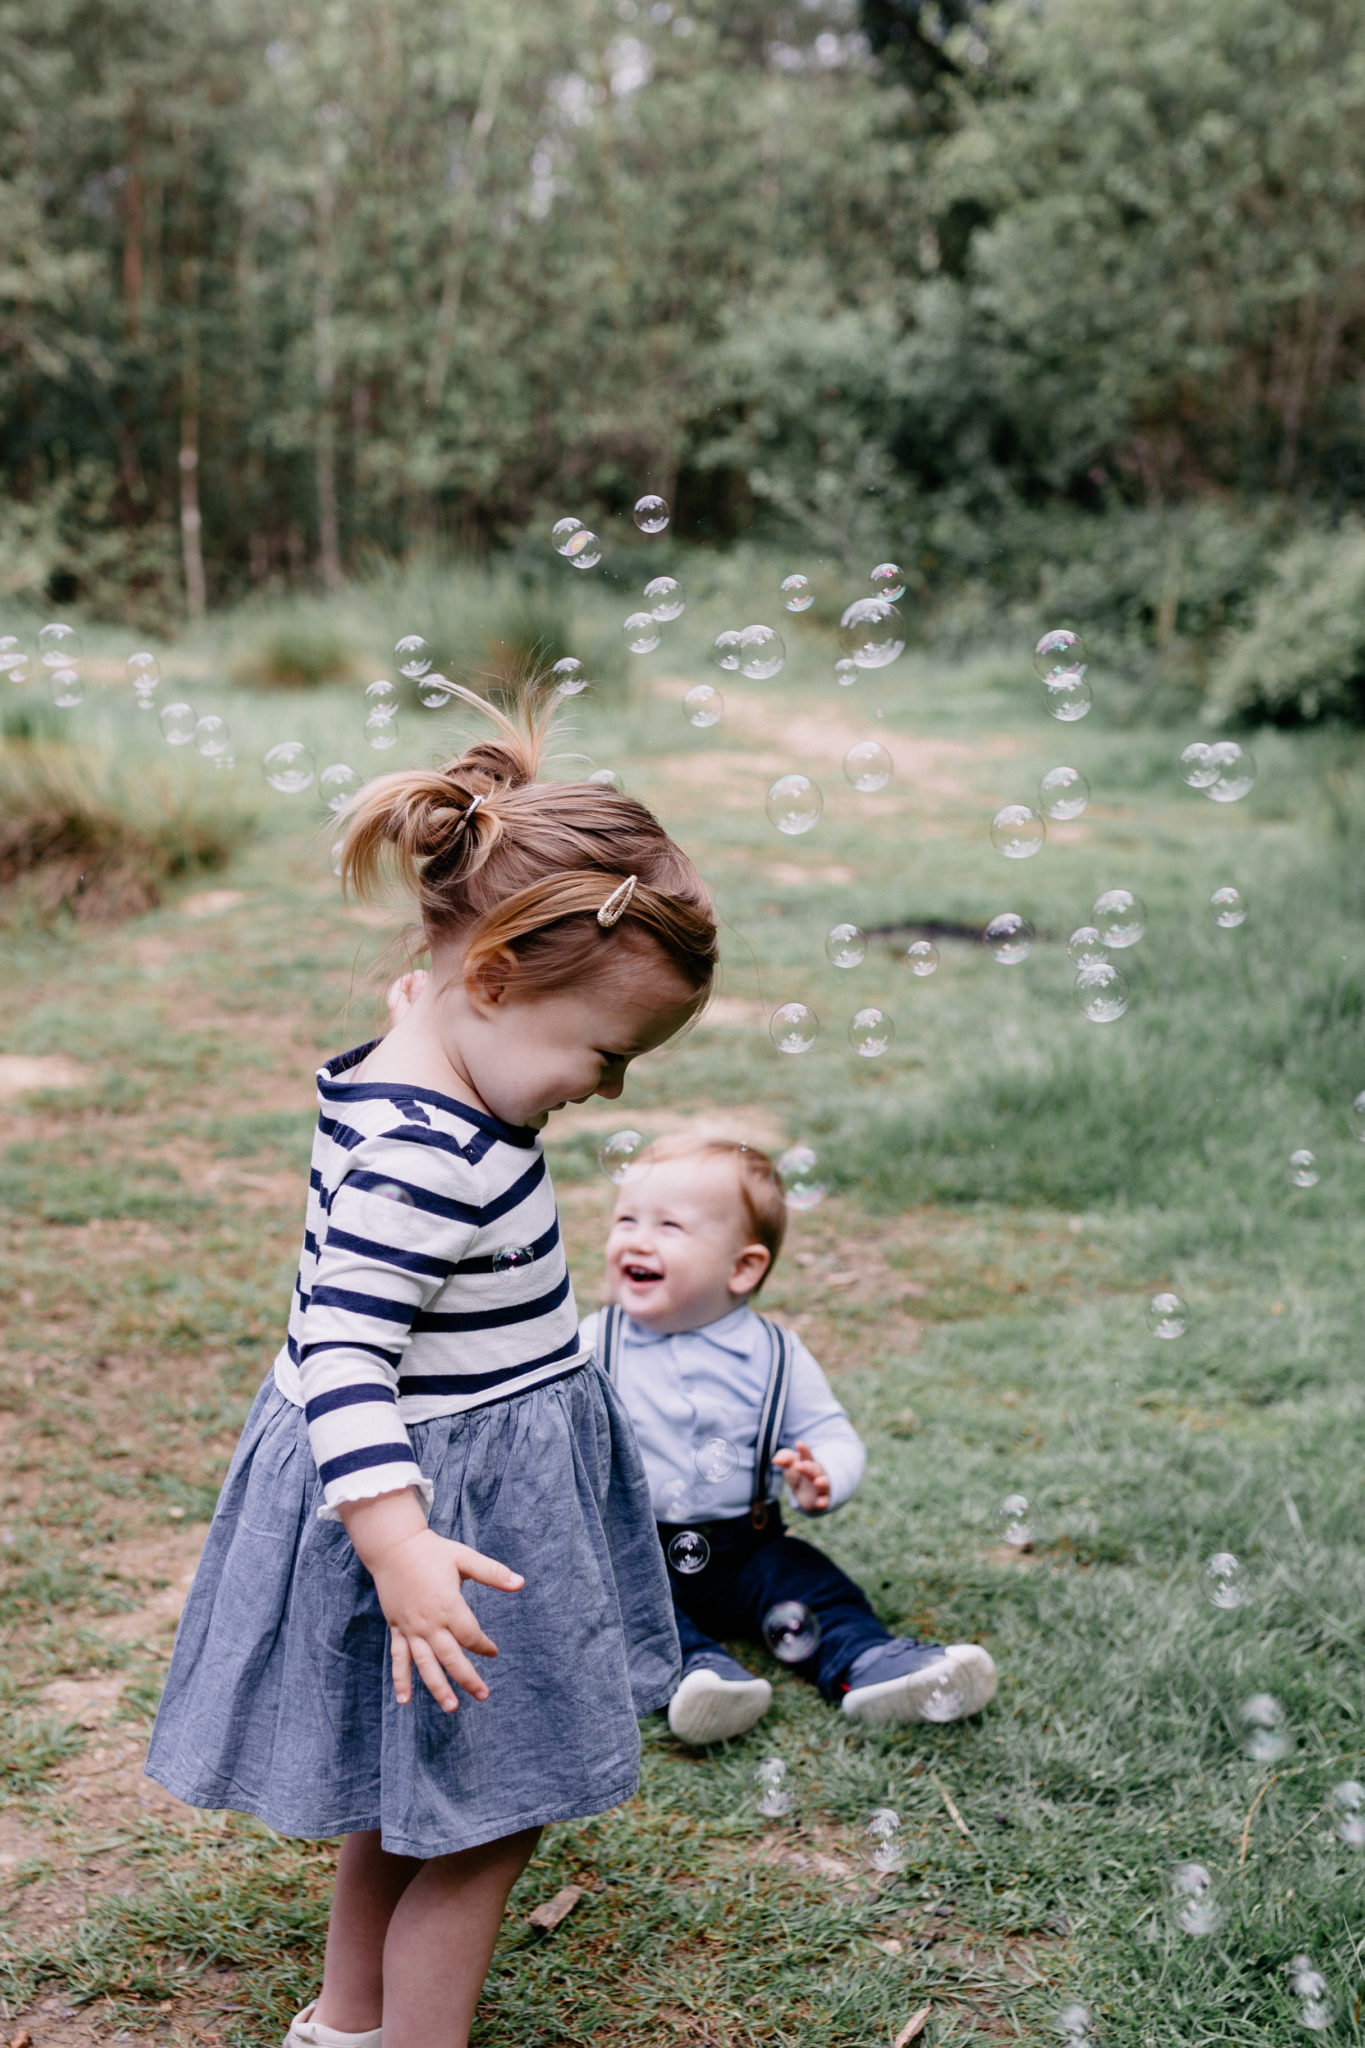 Bubbles fun | Sister and brother | Family lifestyle photography | Hampshire | Basingstoke | Ewa Jones Photography